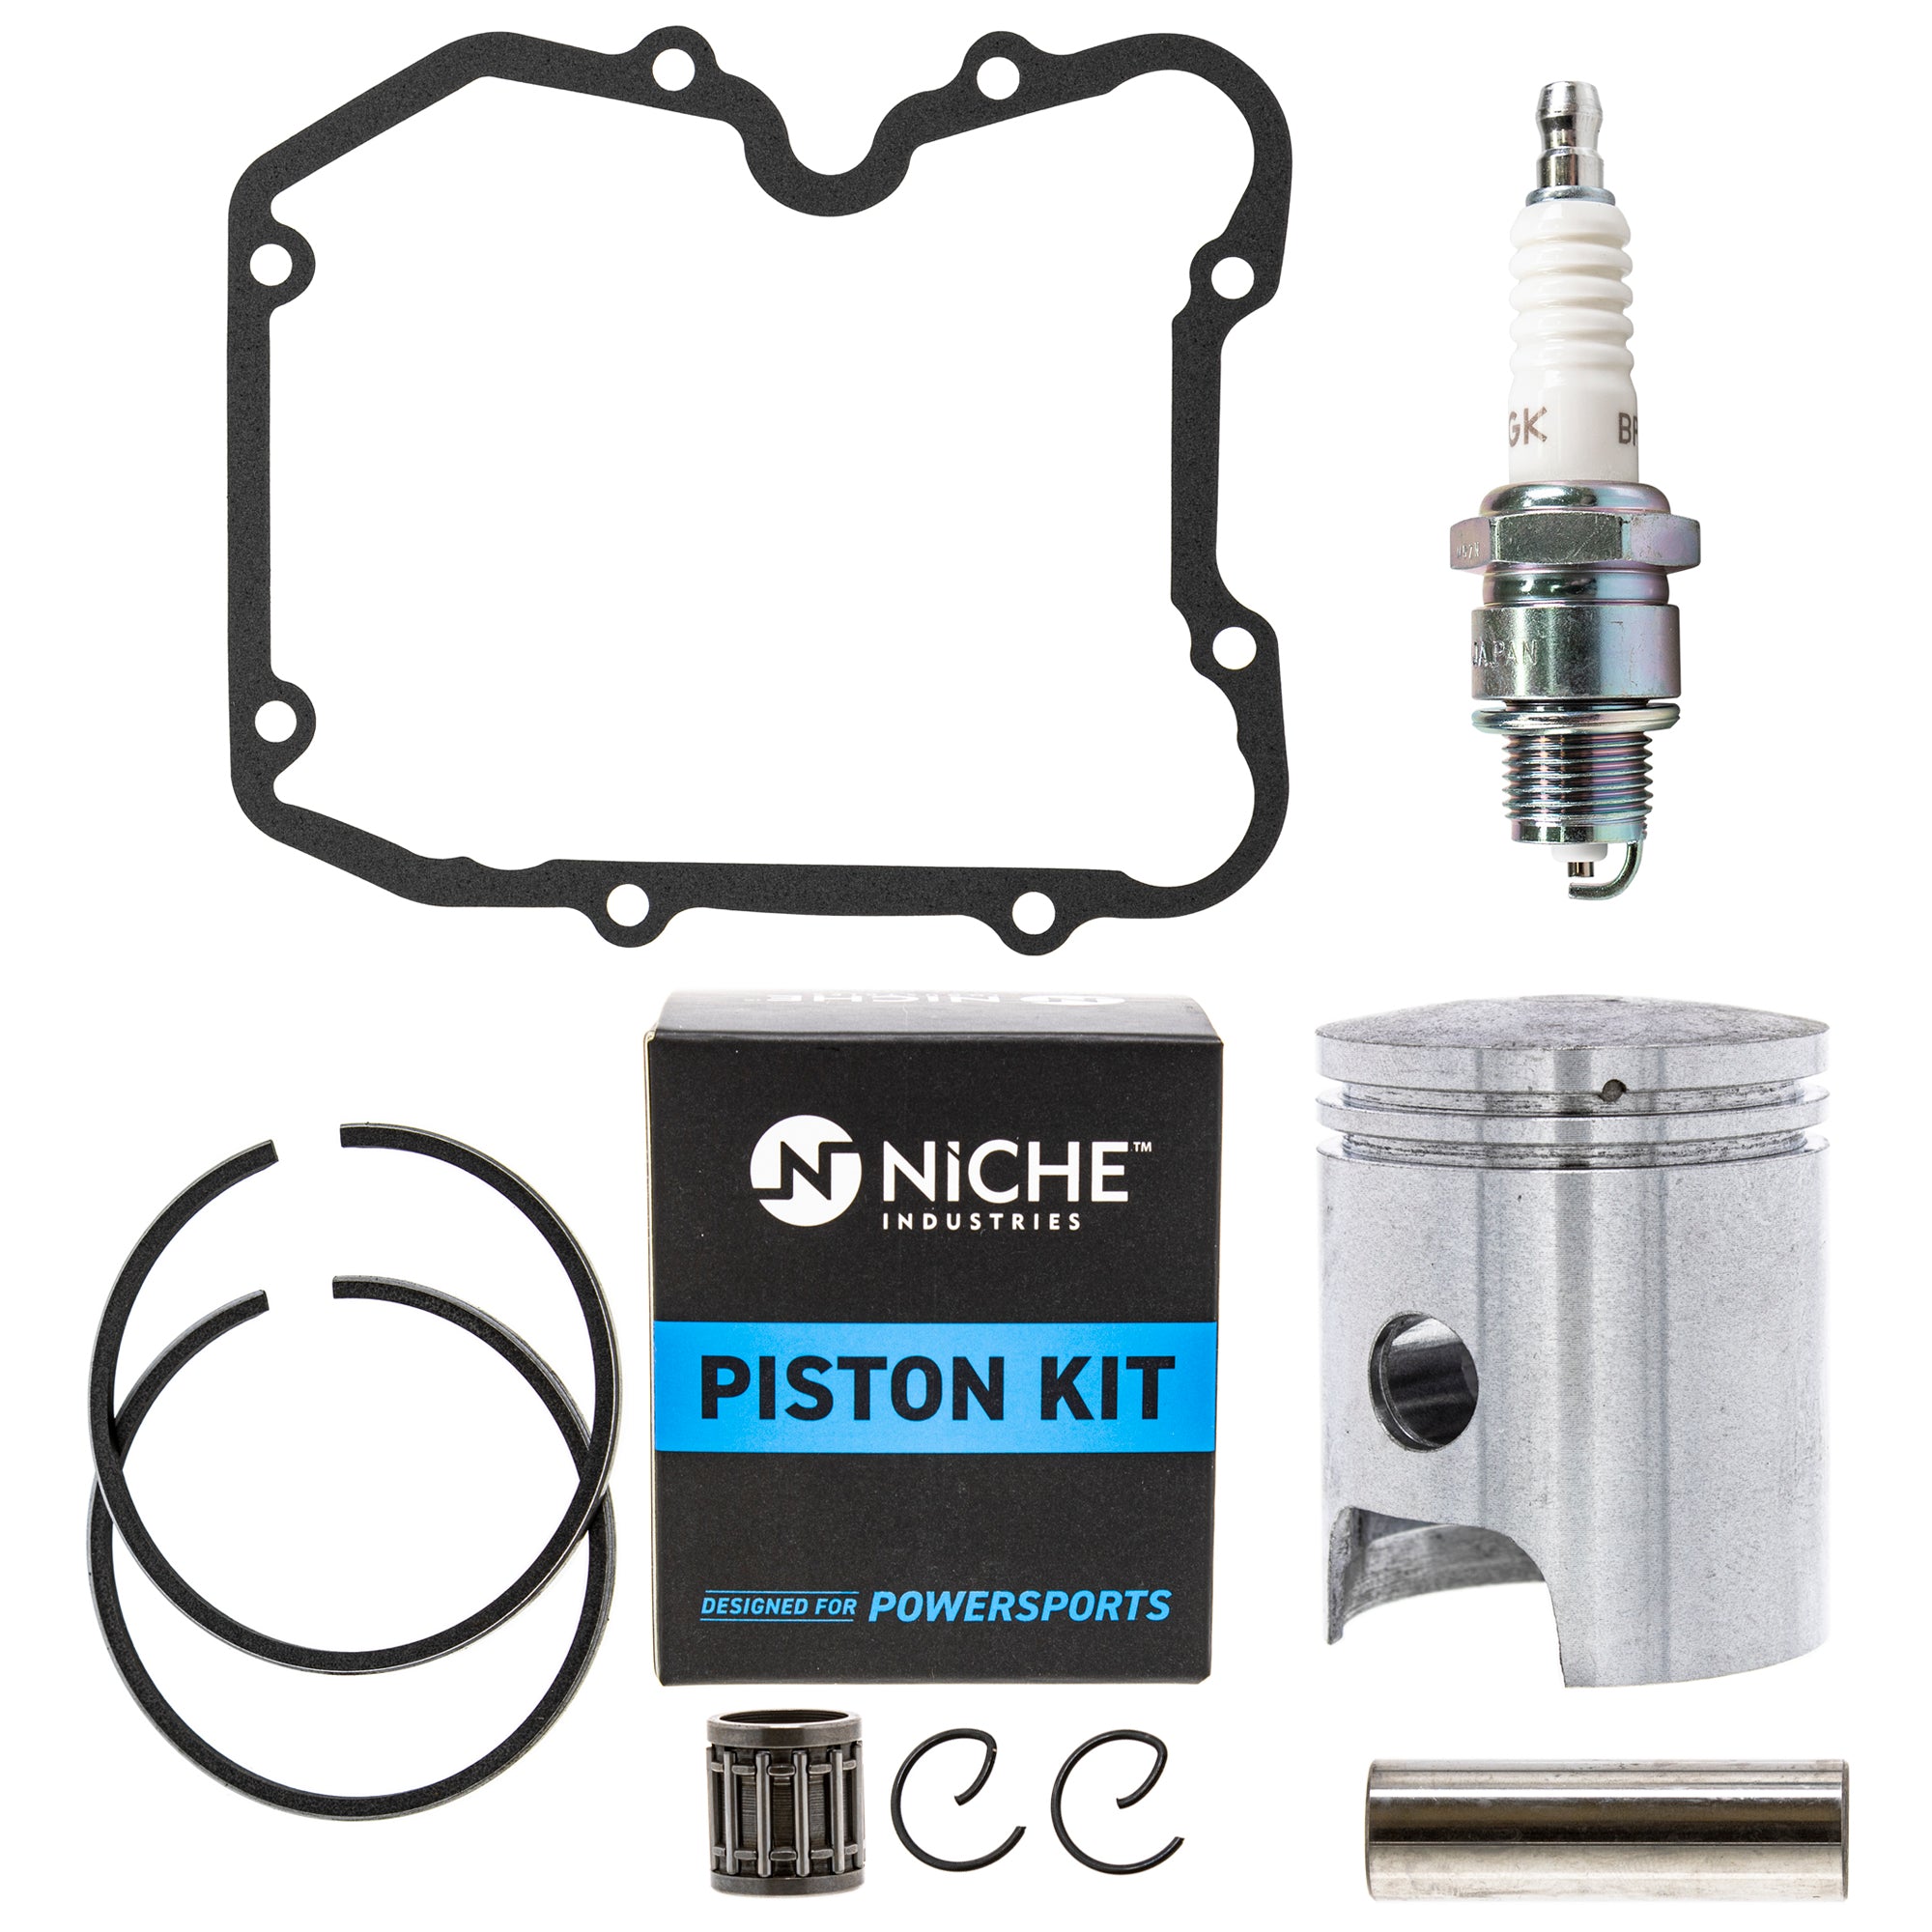 Gasket Piston Rings Spark Plug Kit for Yamaha PW80 4AW-11351-00-00 3E5-11636-00-00 NICHE MK1001135